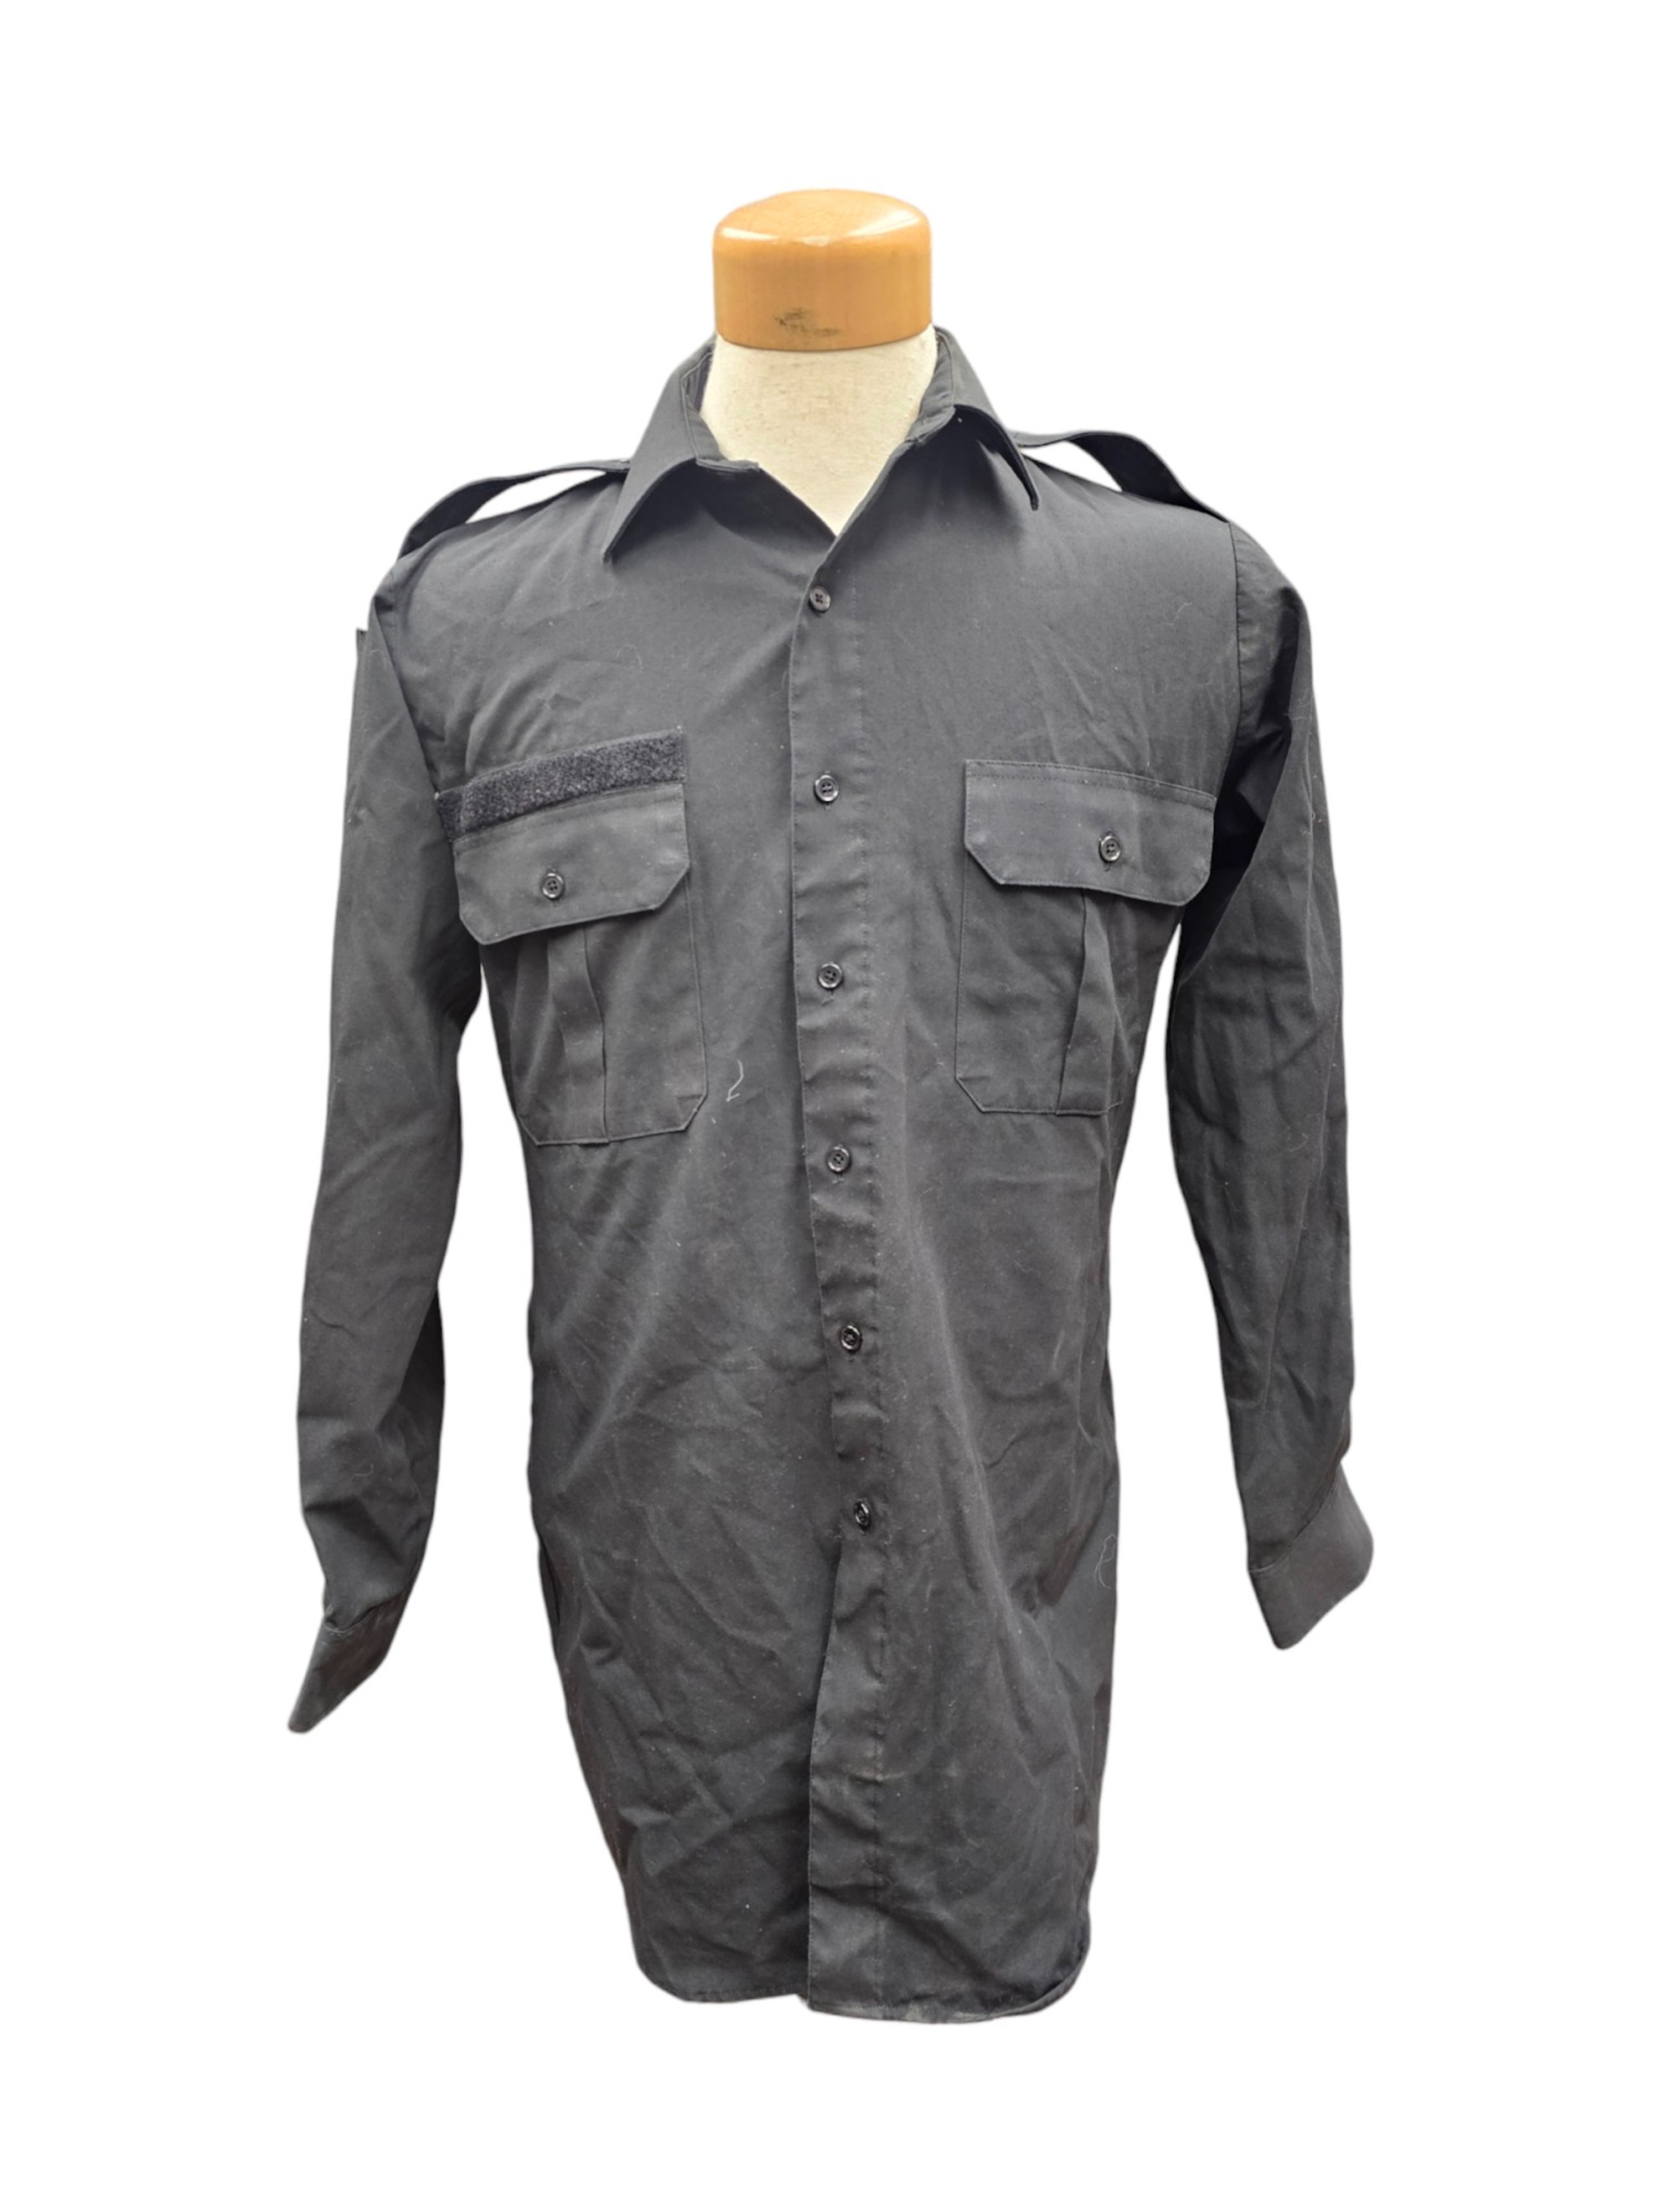 Canadian Armed Forces Men's Black Long Sleeve Dress Shirt